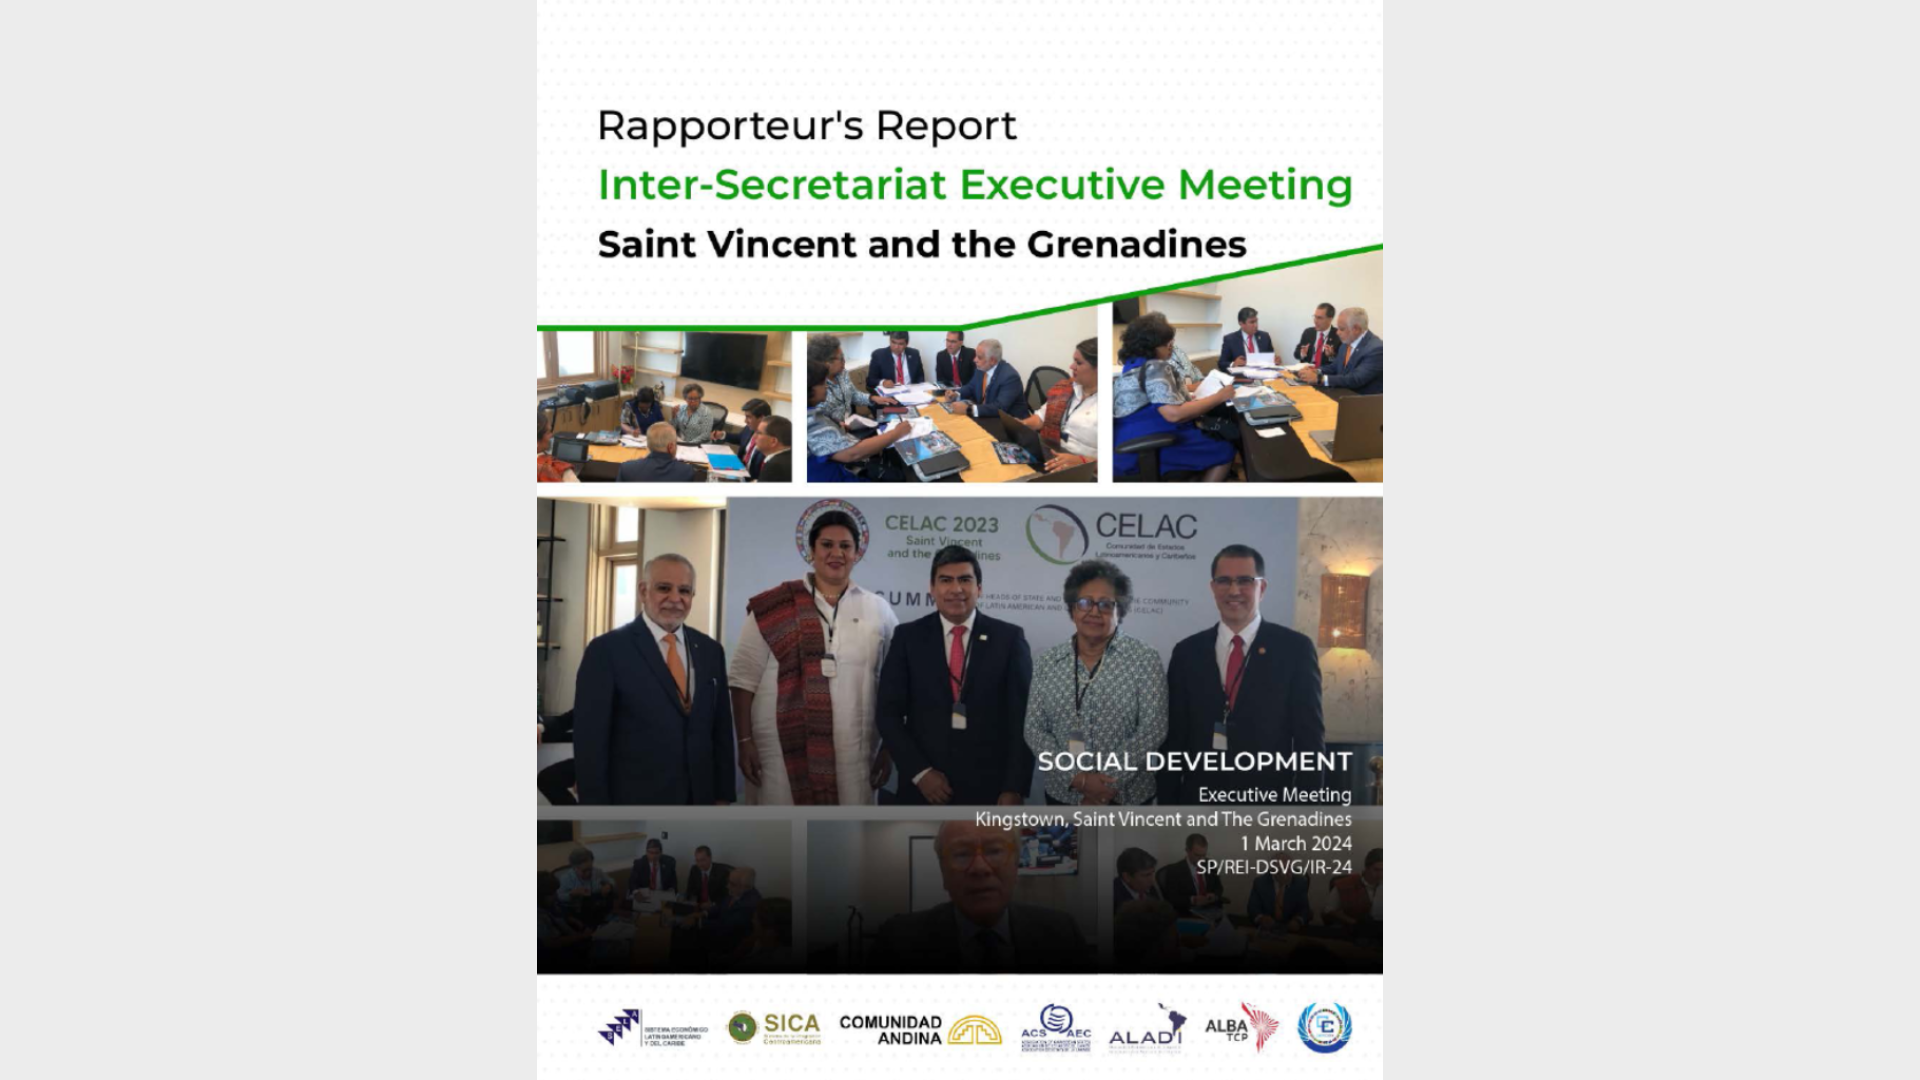 Rapporteur's Report - Inter-Secretariat Executive Meeting